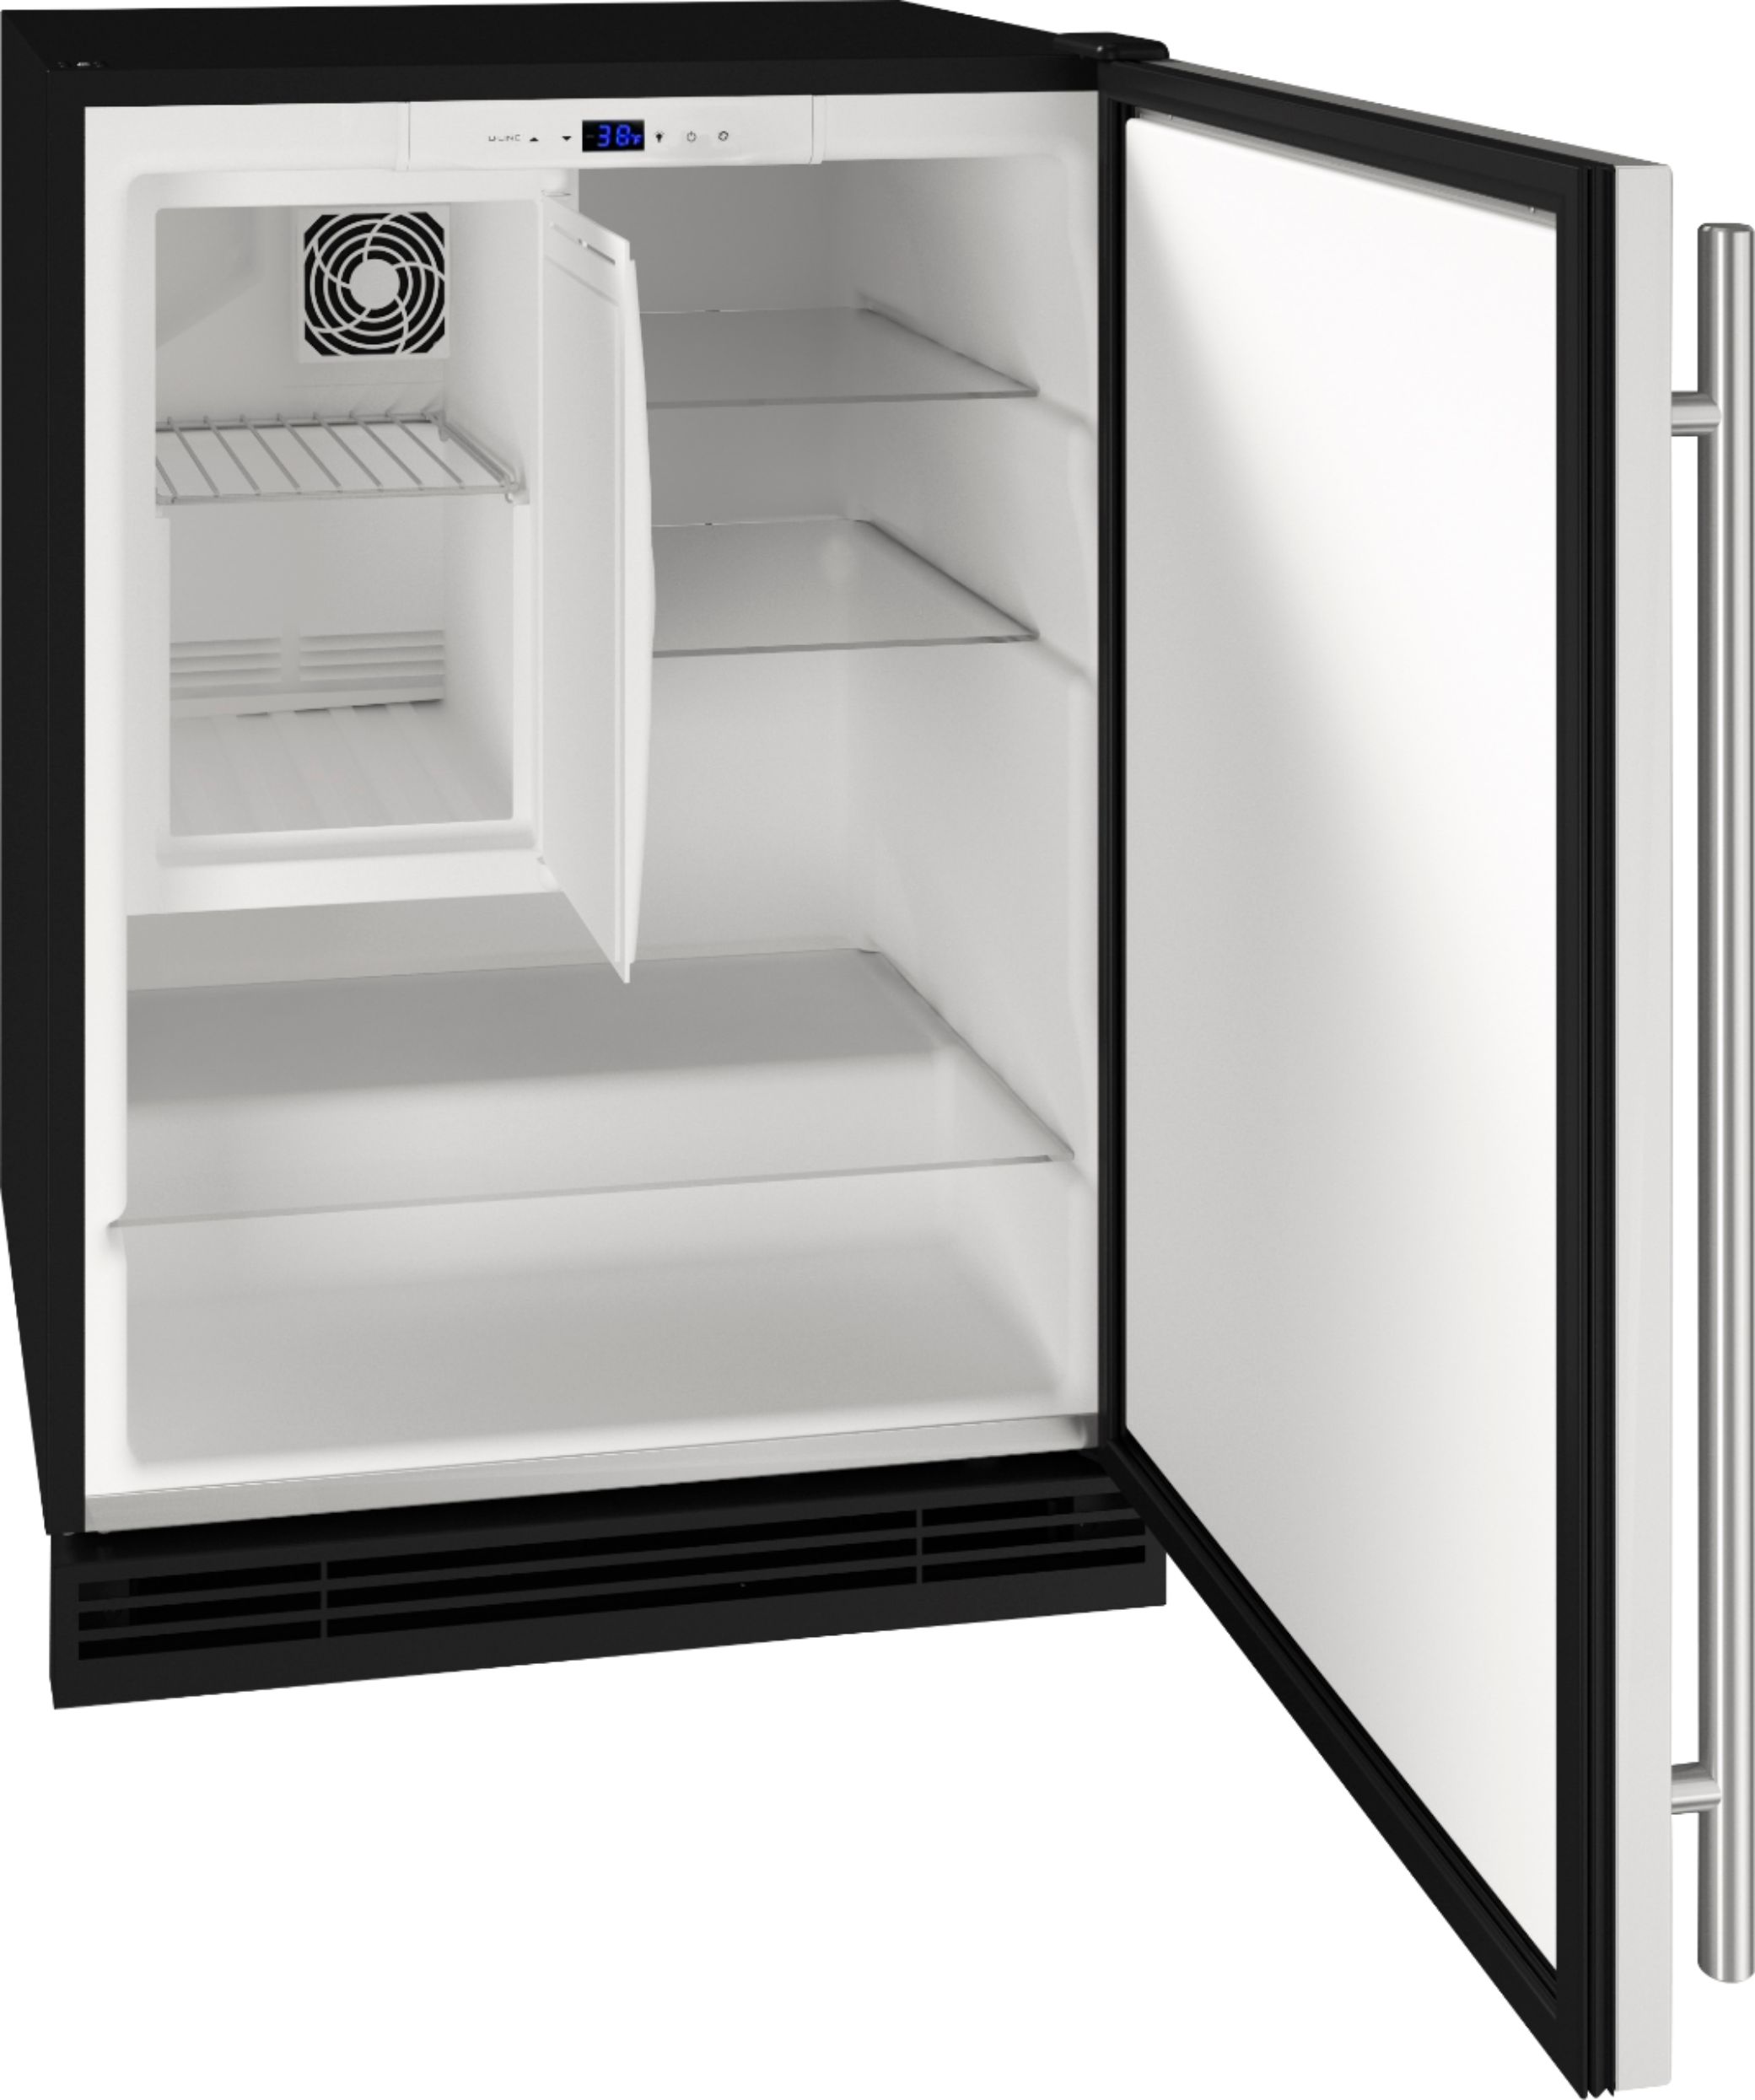 4 2 Cu Ft Undercounter Refrigerator